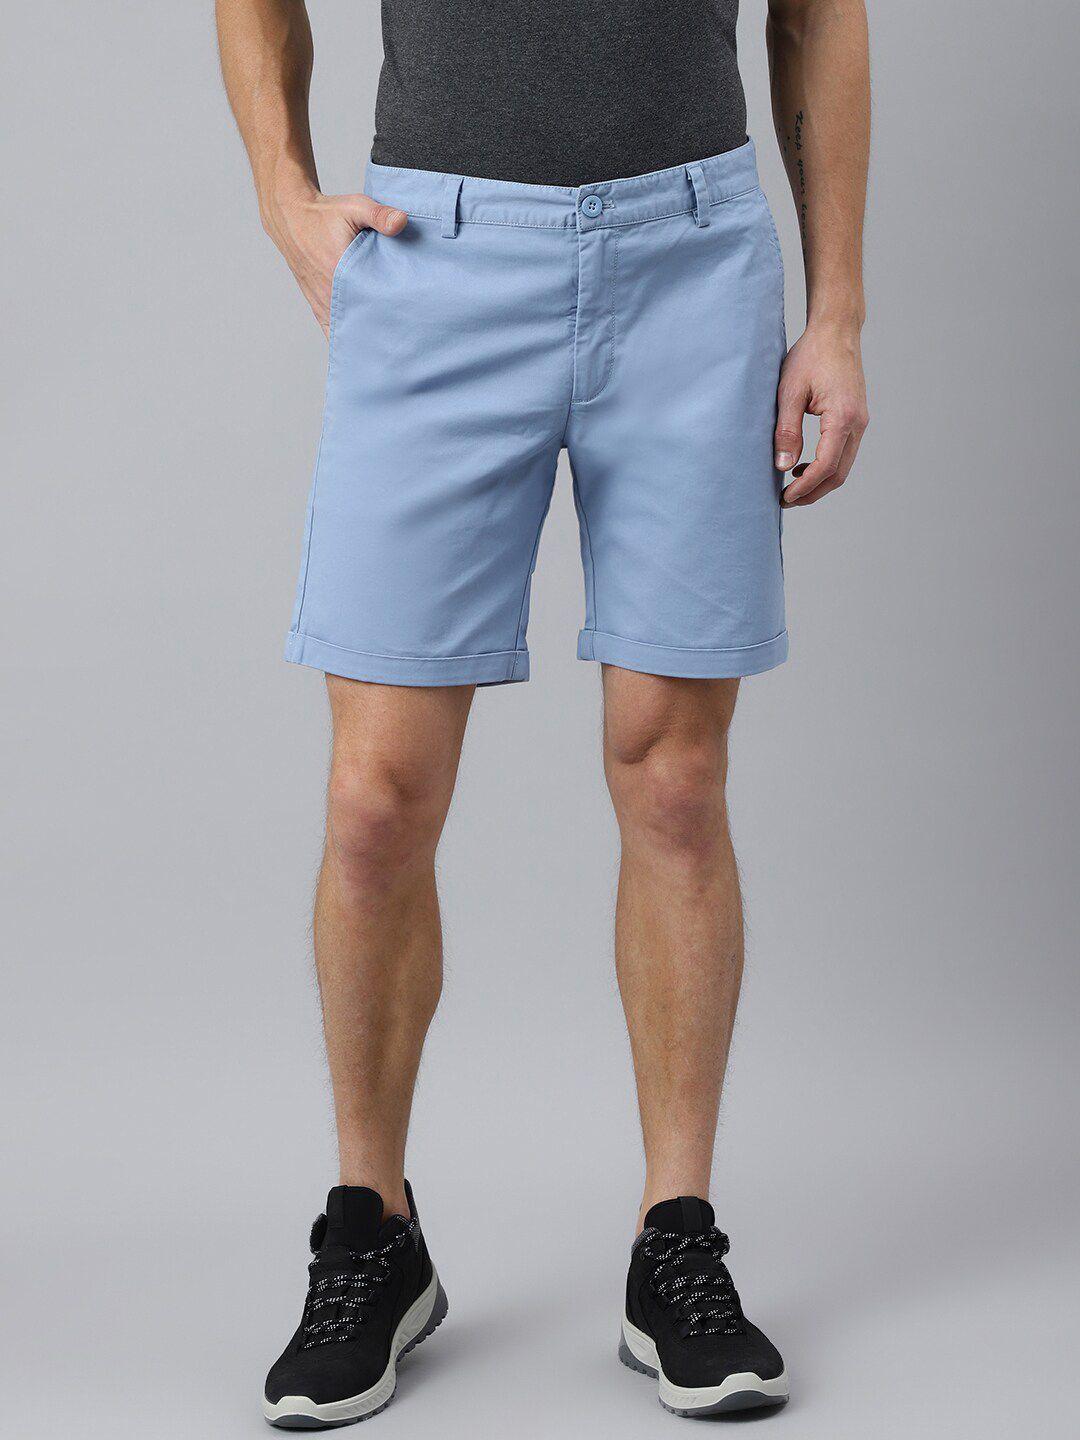 woodland men blue denim shorts